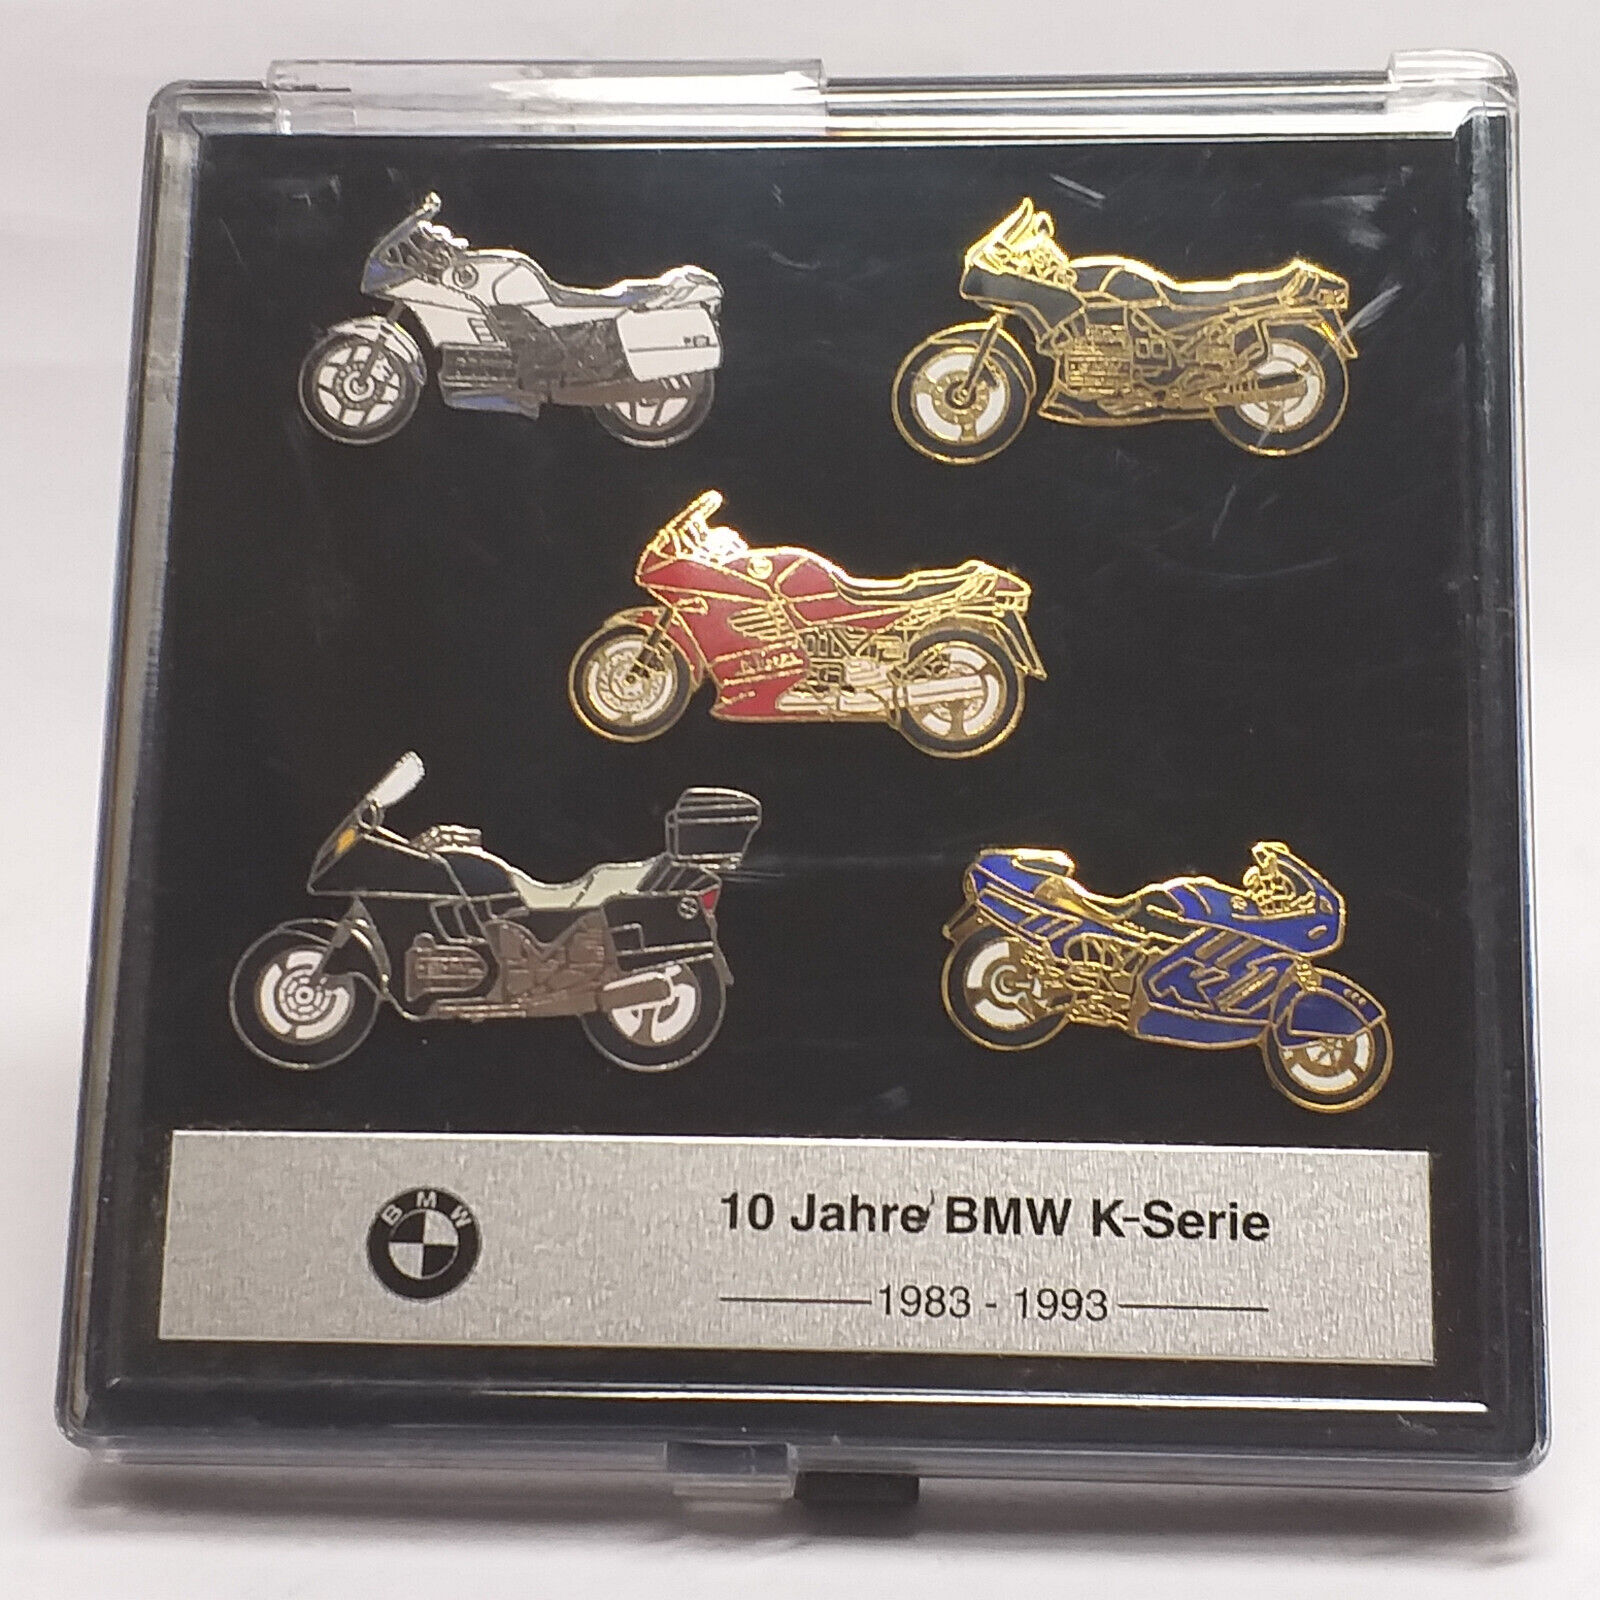 Vintage BMW Set 5 Enamel Pin Badges 10 Years K-Series Motorcycles 1983-1993 Case